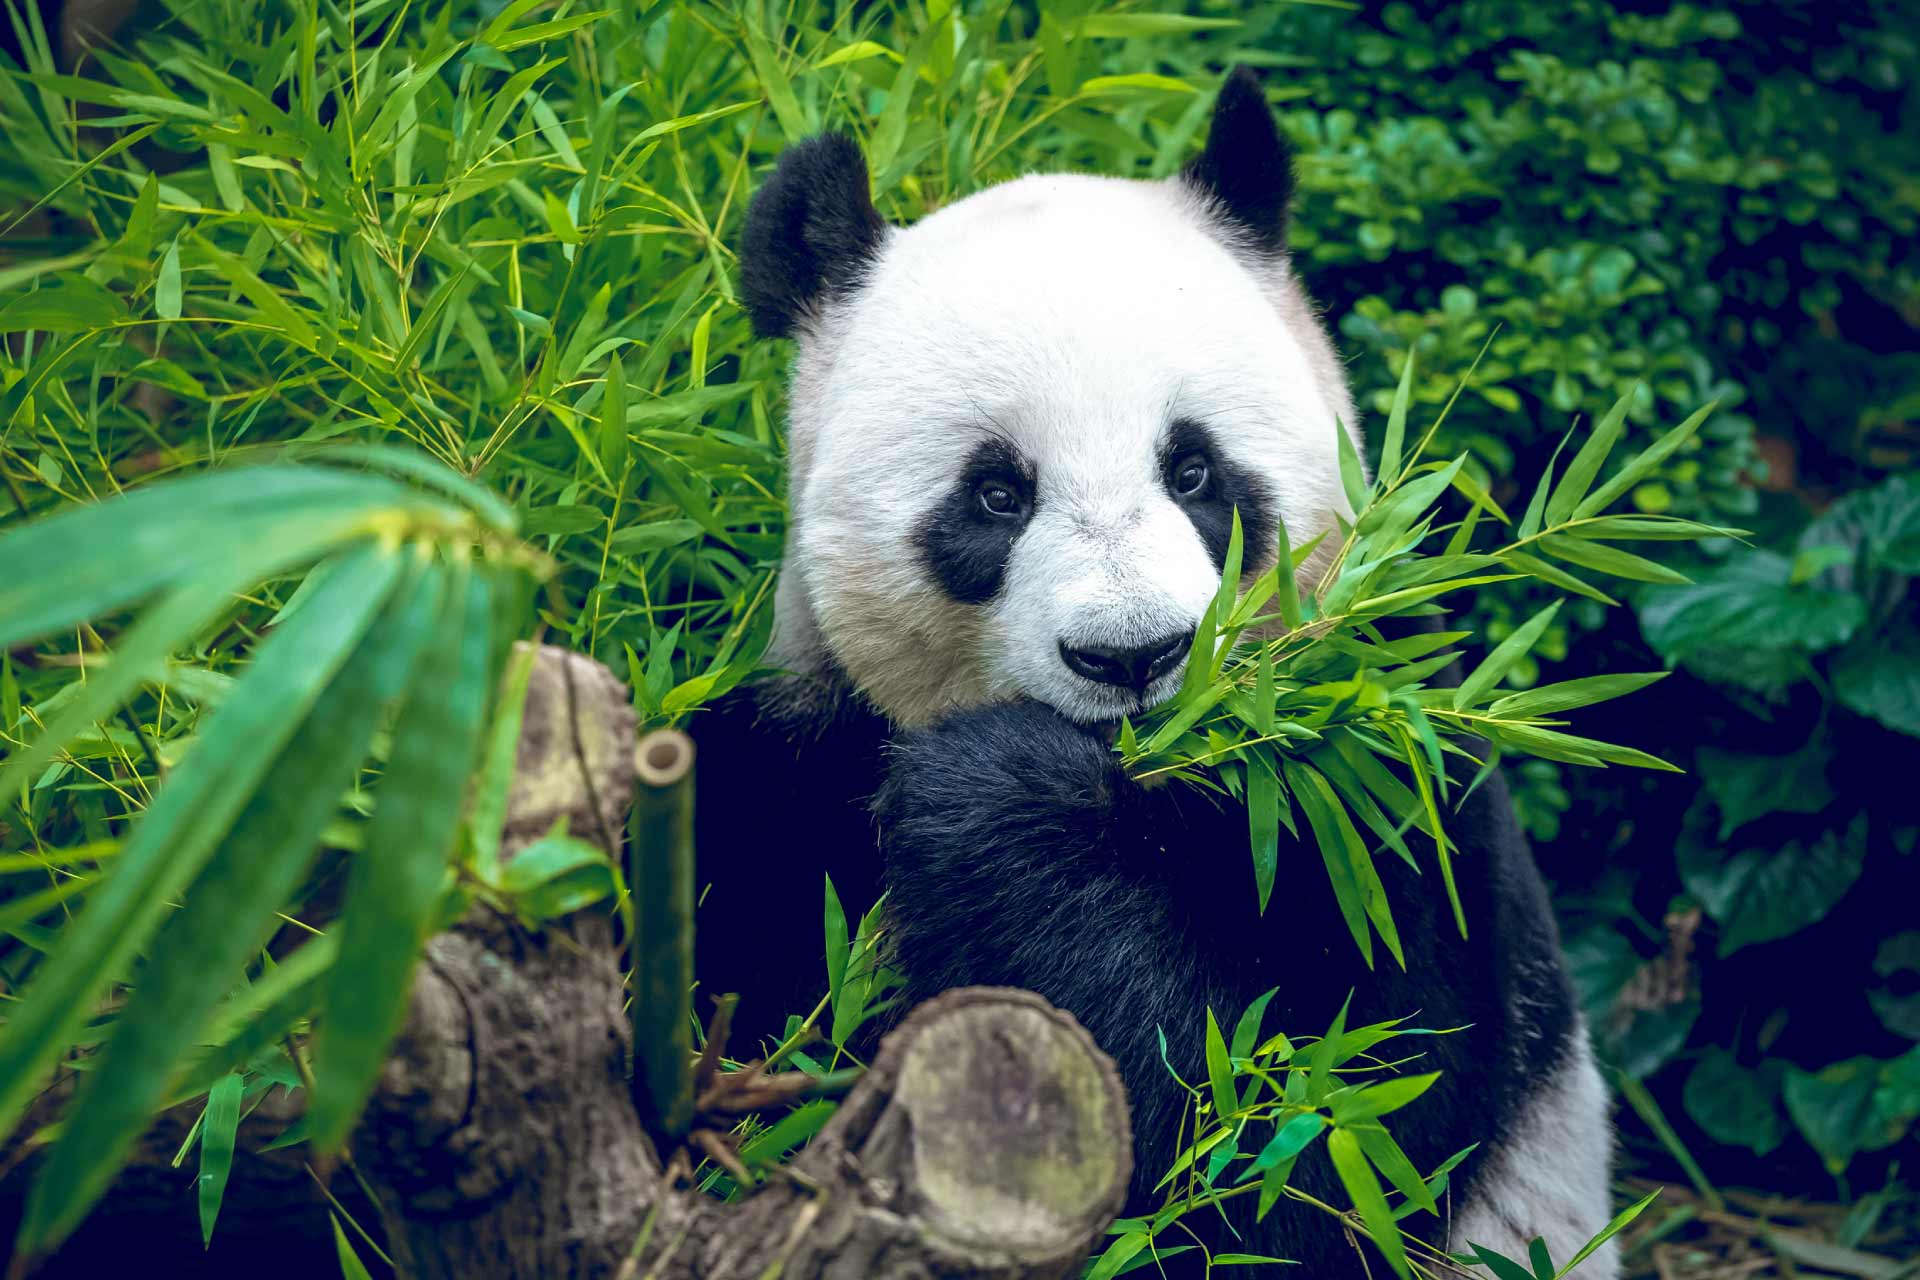 Gut microbes help wild pandas fatten up while eating bamboo